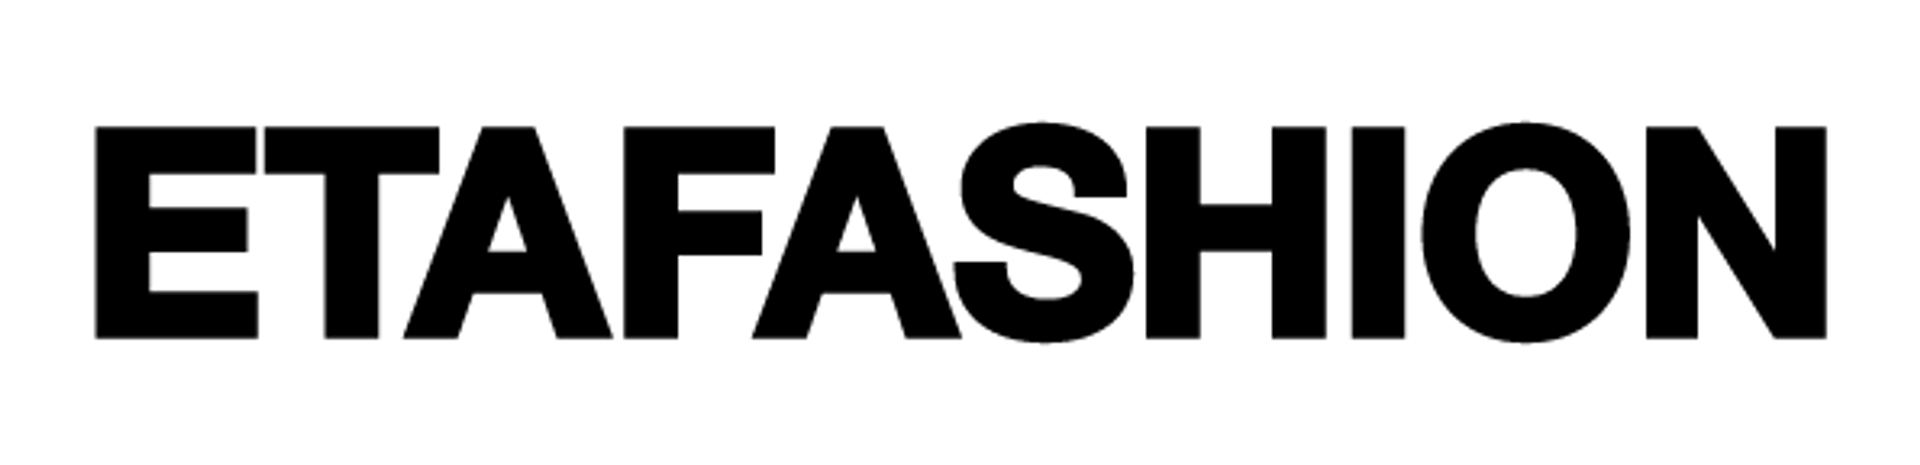 ETAFASHION logo de catálogo